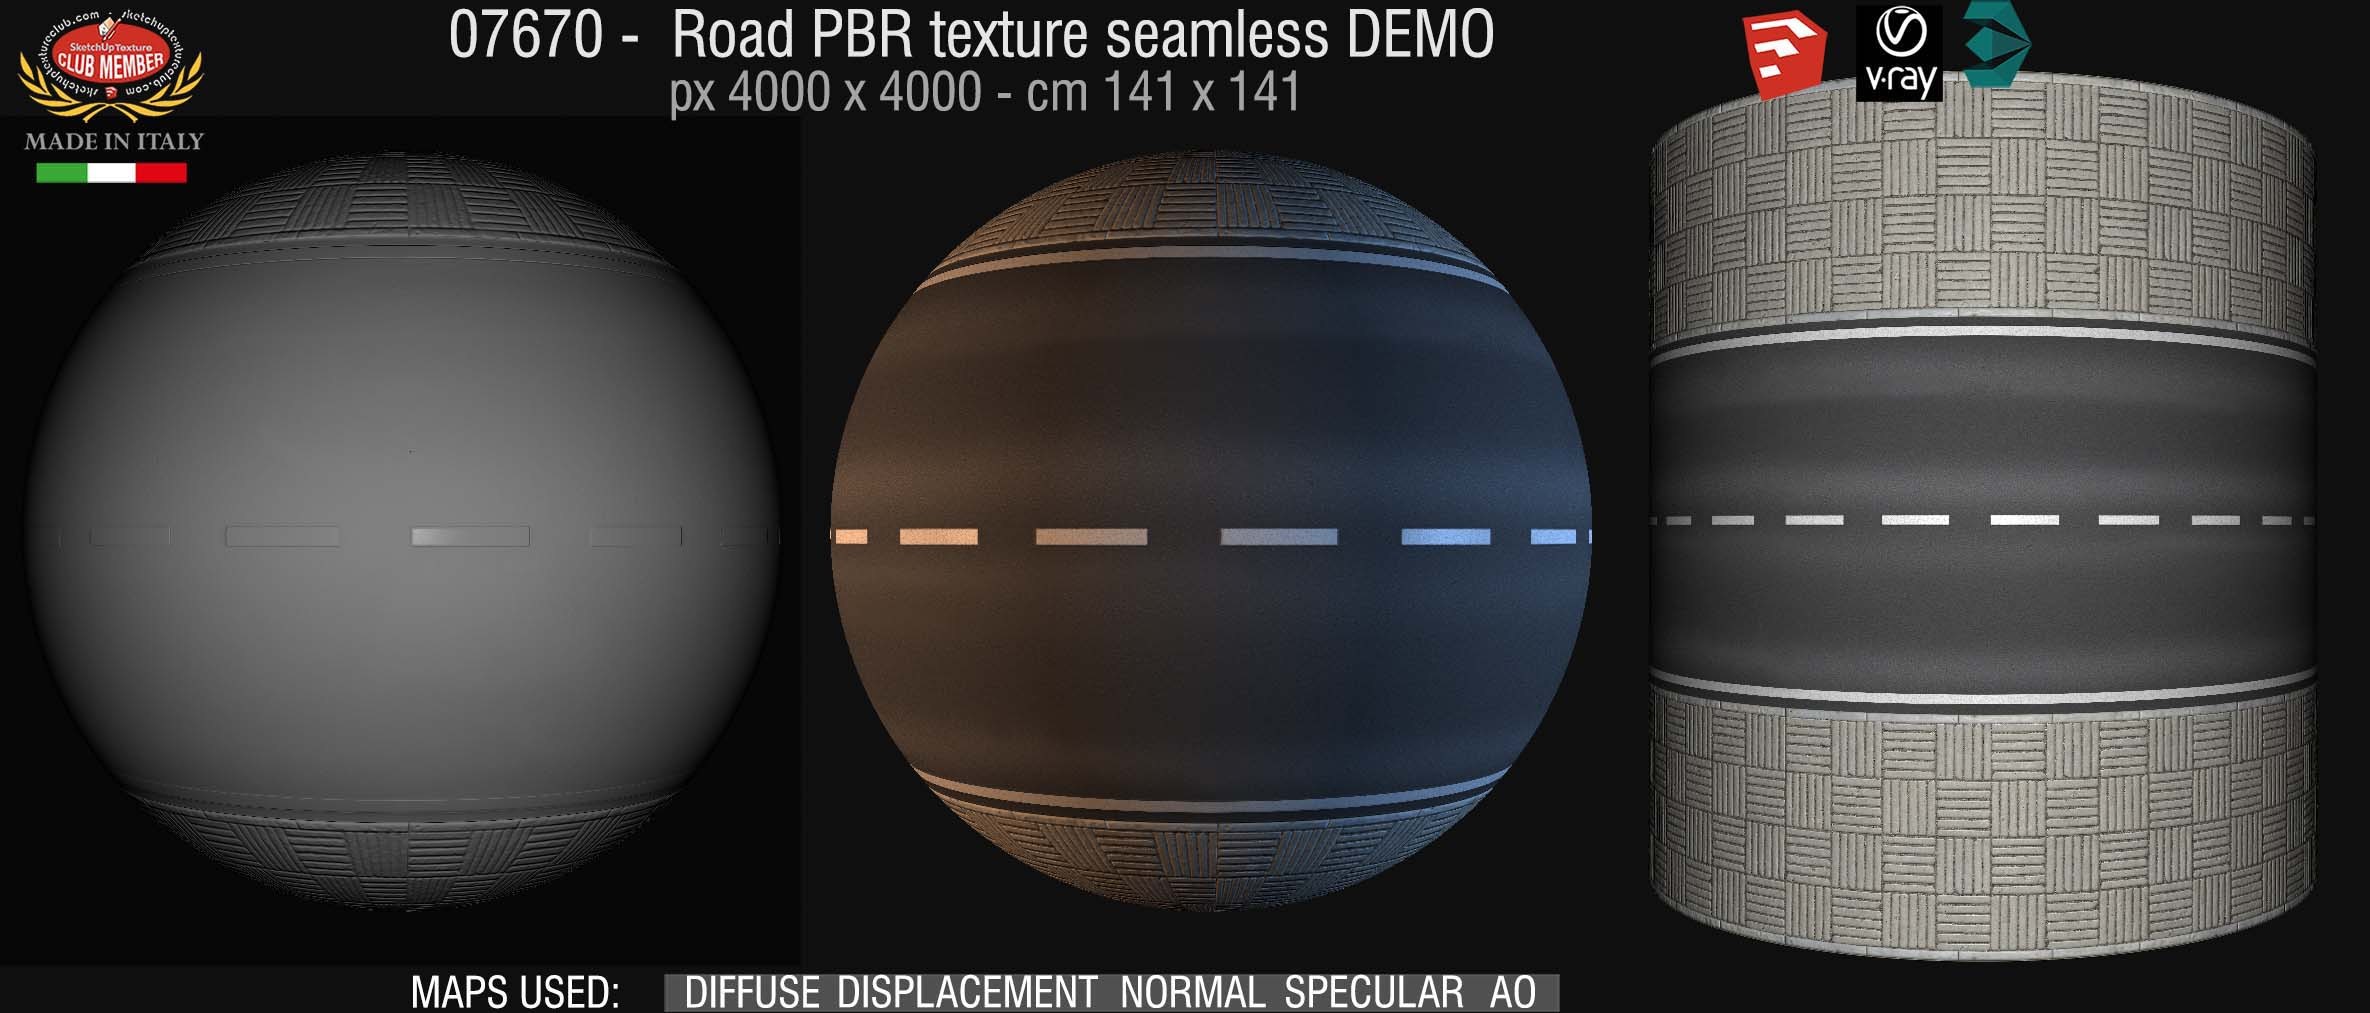 07670 road PBR texture seamless DEMO